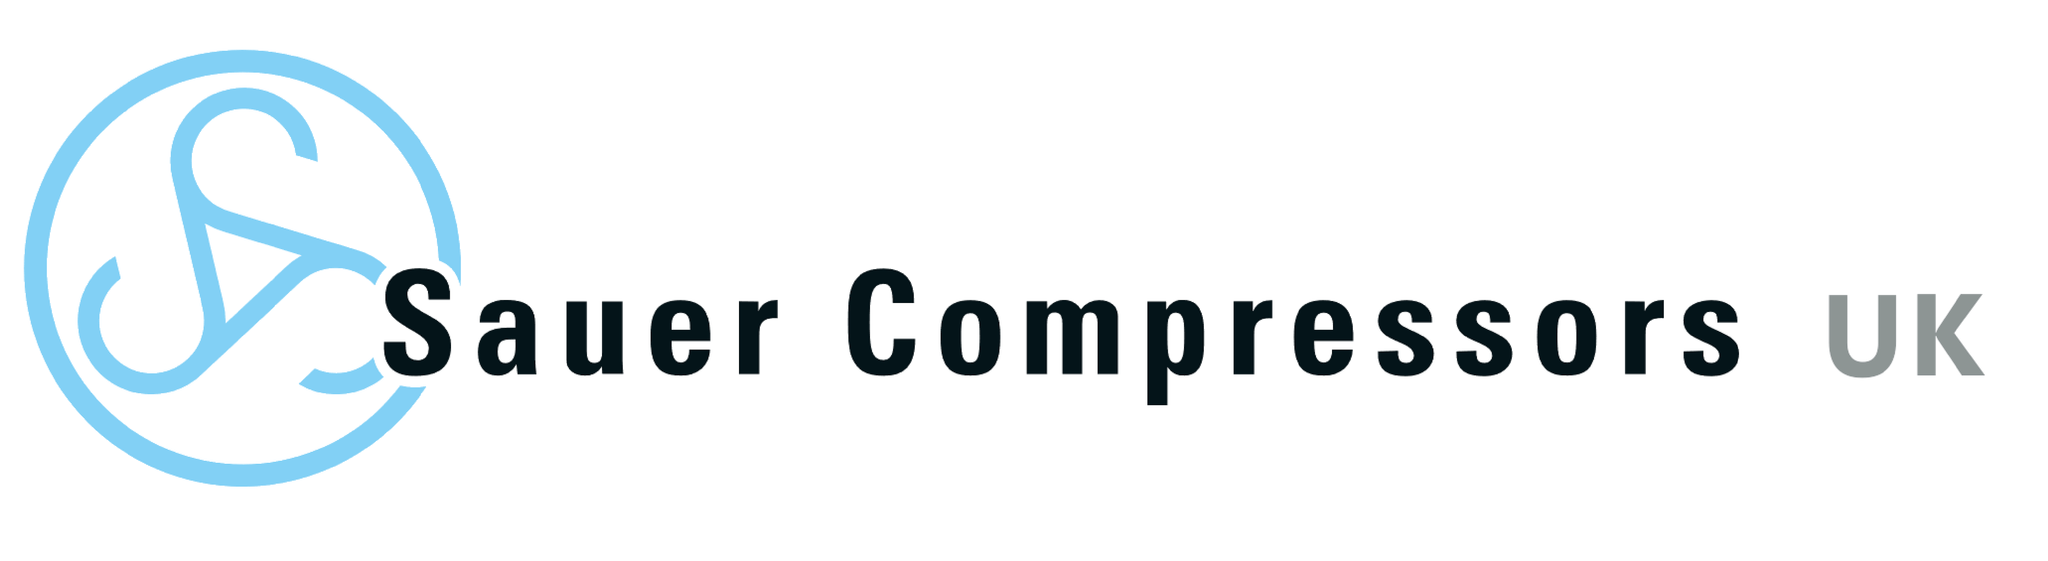 Sauer Compressors UK Ltd